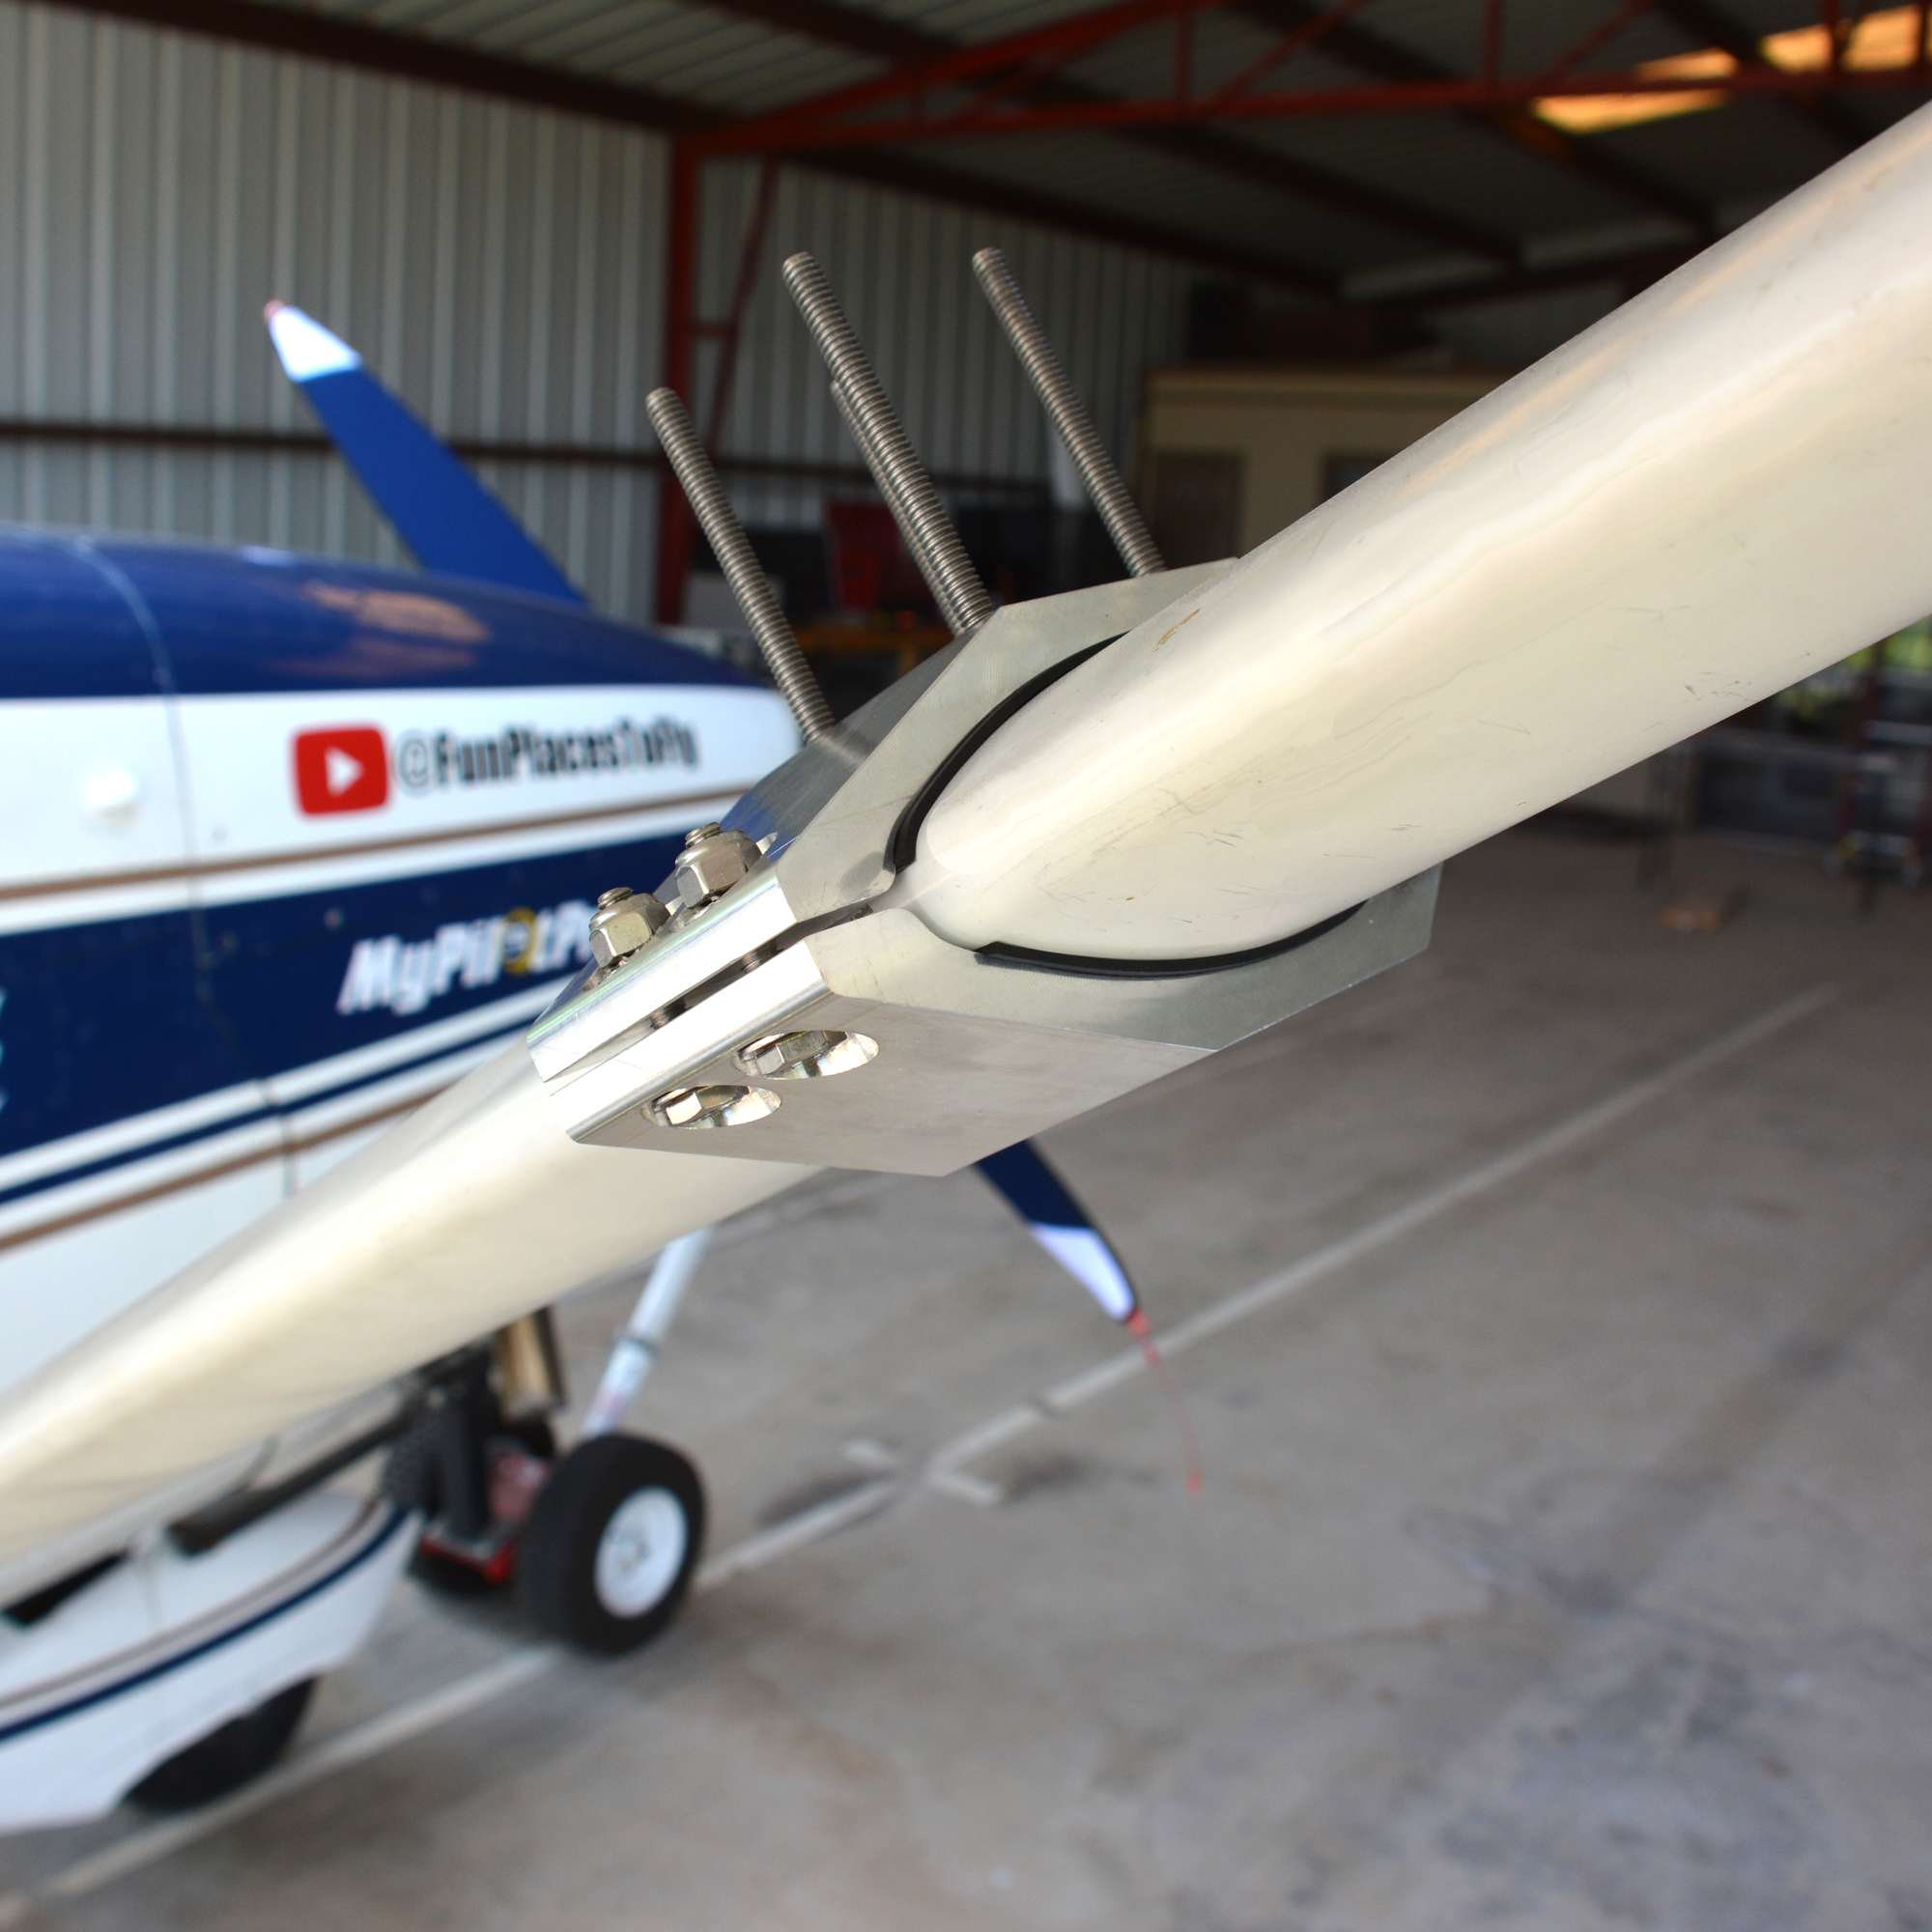 GoPro Cessna mount